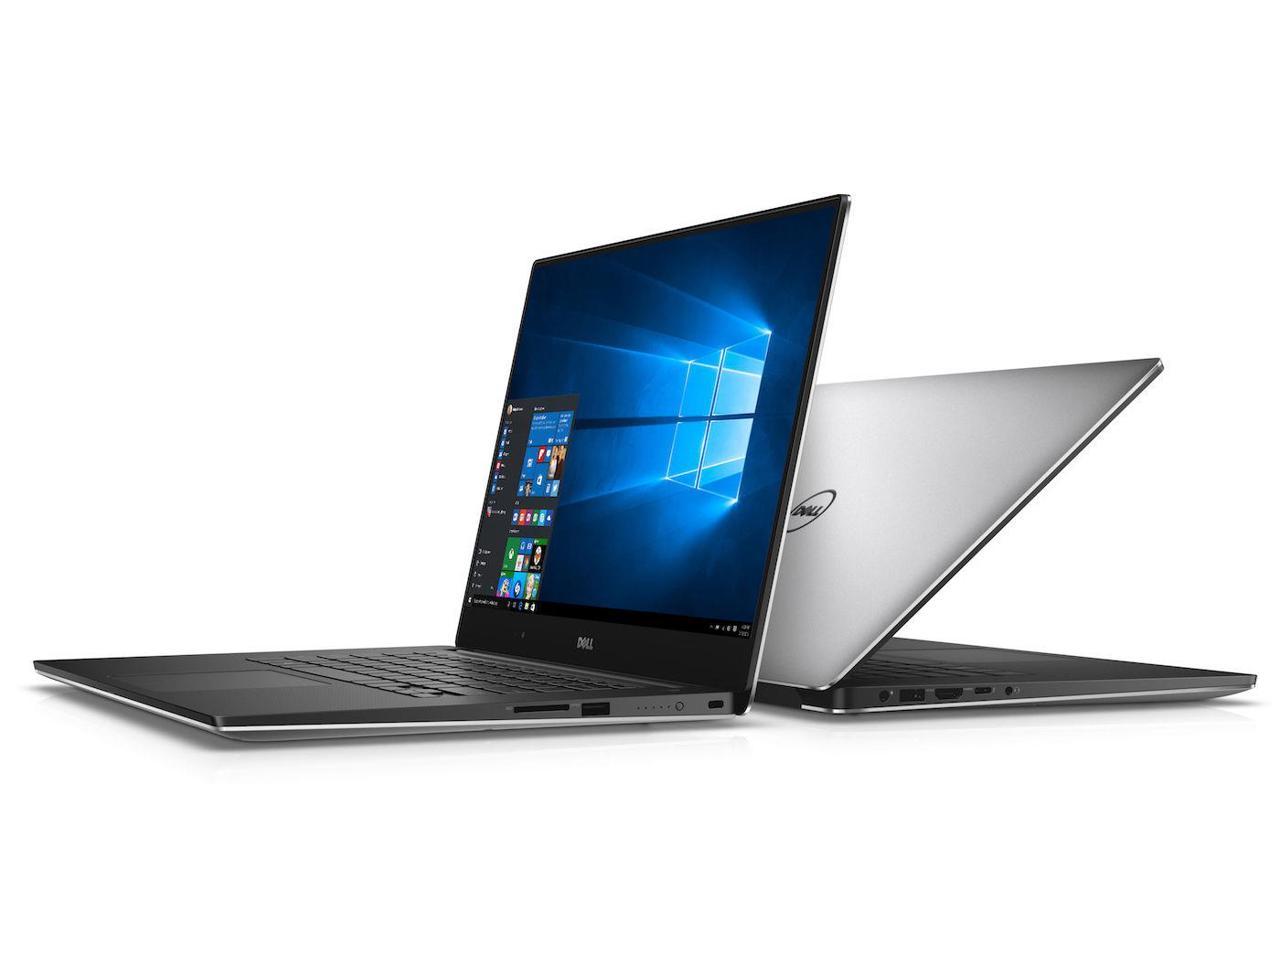 Grade B Dell XPS 15 9550 15.6" Refurb Laptop - Intel i7 i7-6700HQ 6th Gen 2.6 GHz 32GB SATA 2.5" 1TB Win 10 Home - Wifi, Webcam, Touchscreen, Bluetooth